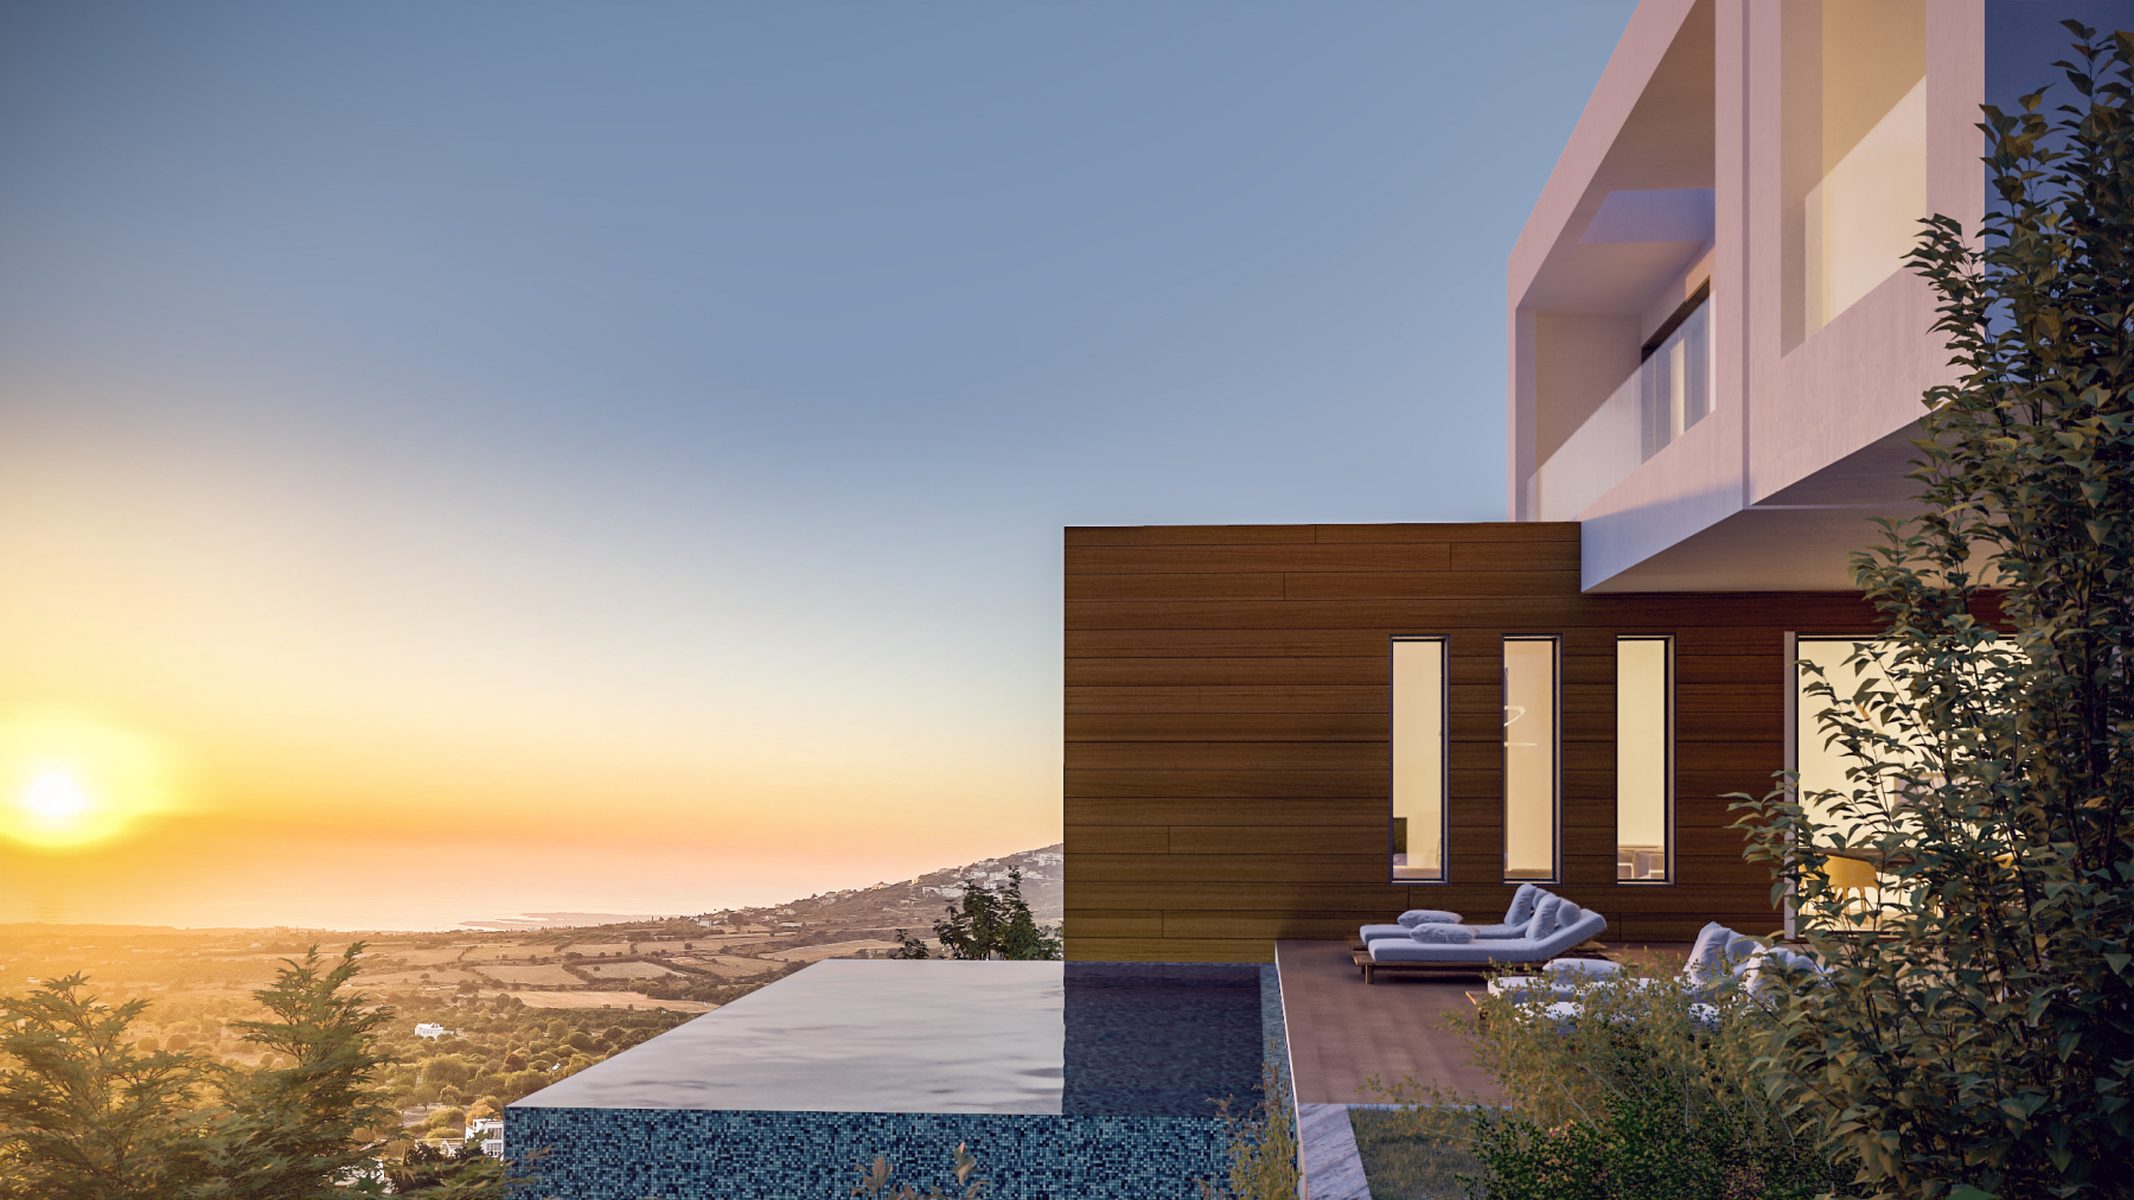 Modern Spacious 3 Bedroom Villa in the Beautiful Hills of Tsada, Pafos